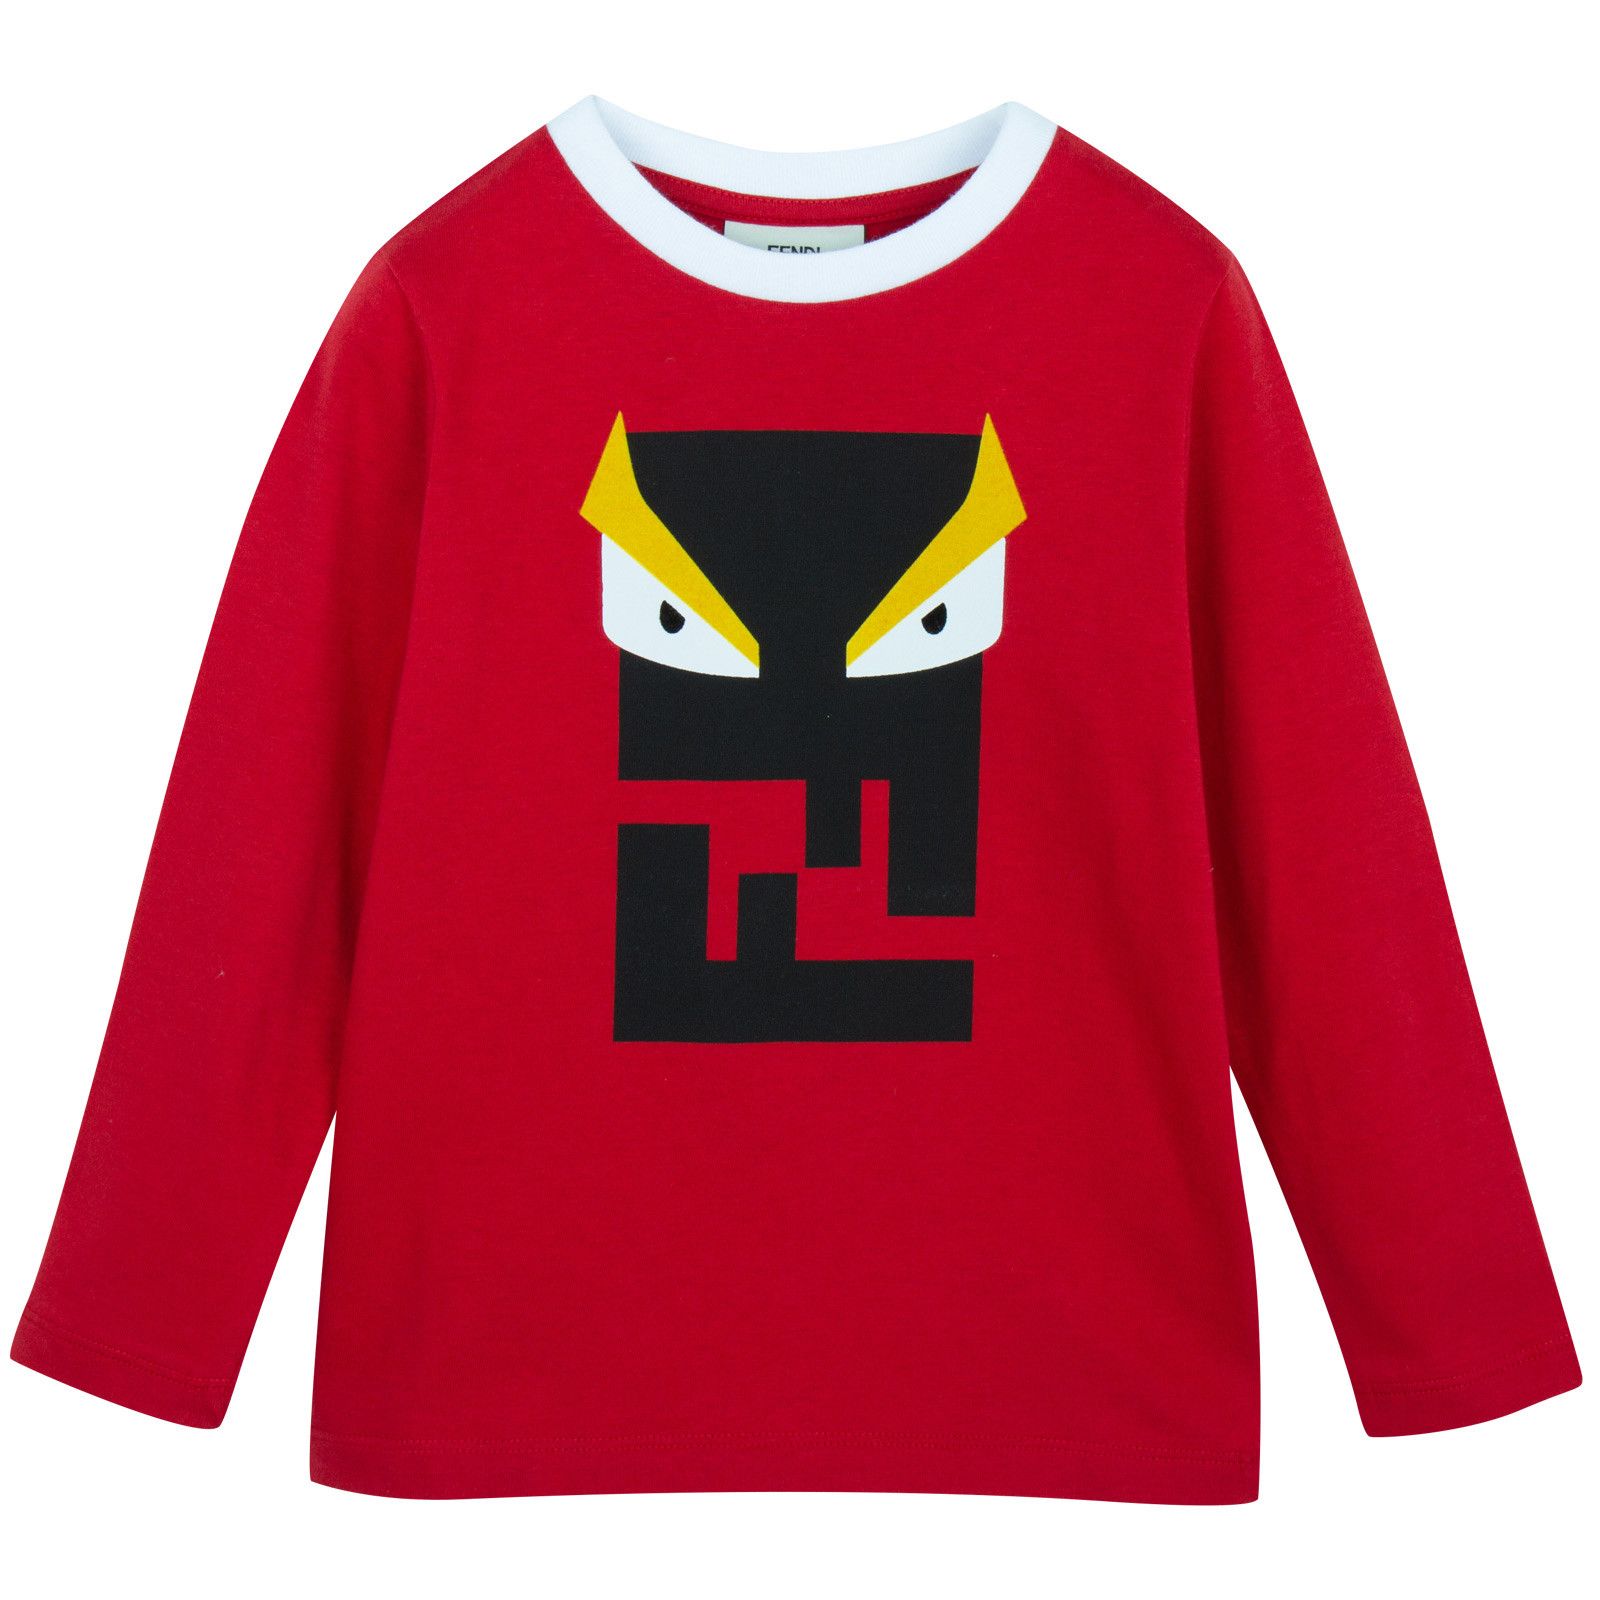 Boys Red Printed Monster Cotton T-Shirt - CÉMAROSE | Children's Fashion Store - 1